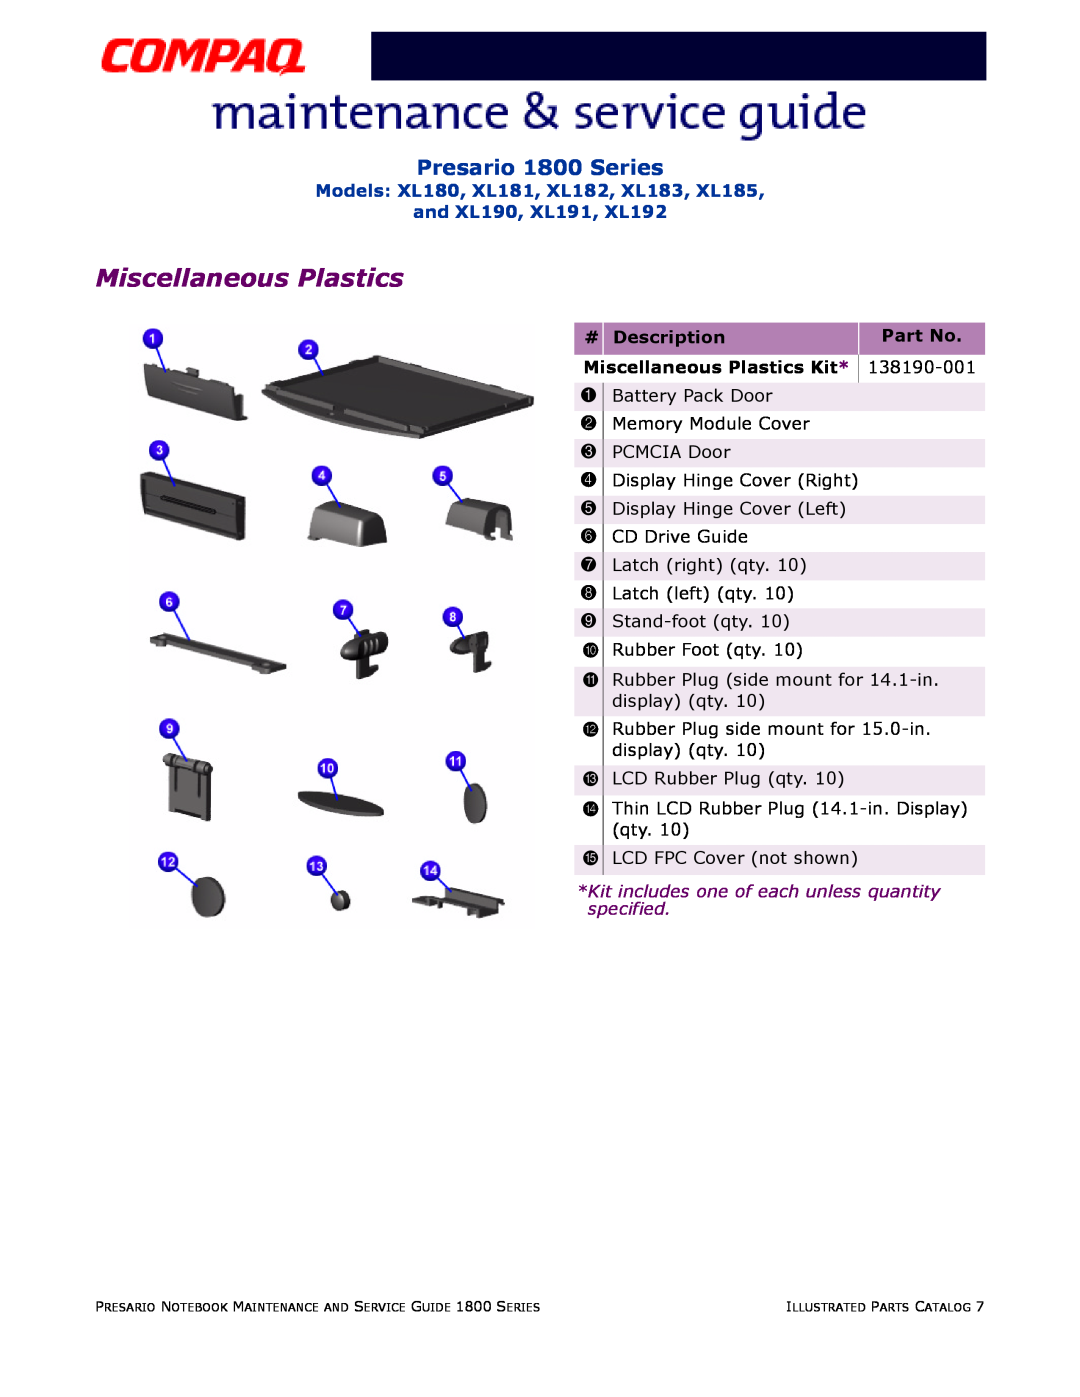 Compaq XL183, XL190, XL180, XL191, XL192, XL181, XL185, XL182 Presario 1800 Series, Description, Miscellaneous Plastics Kit 